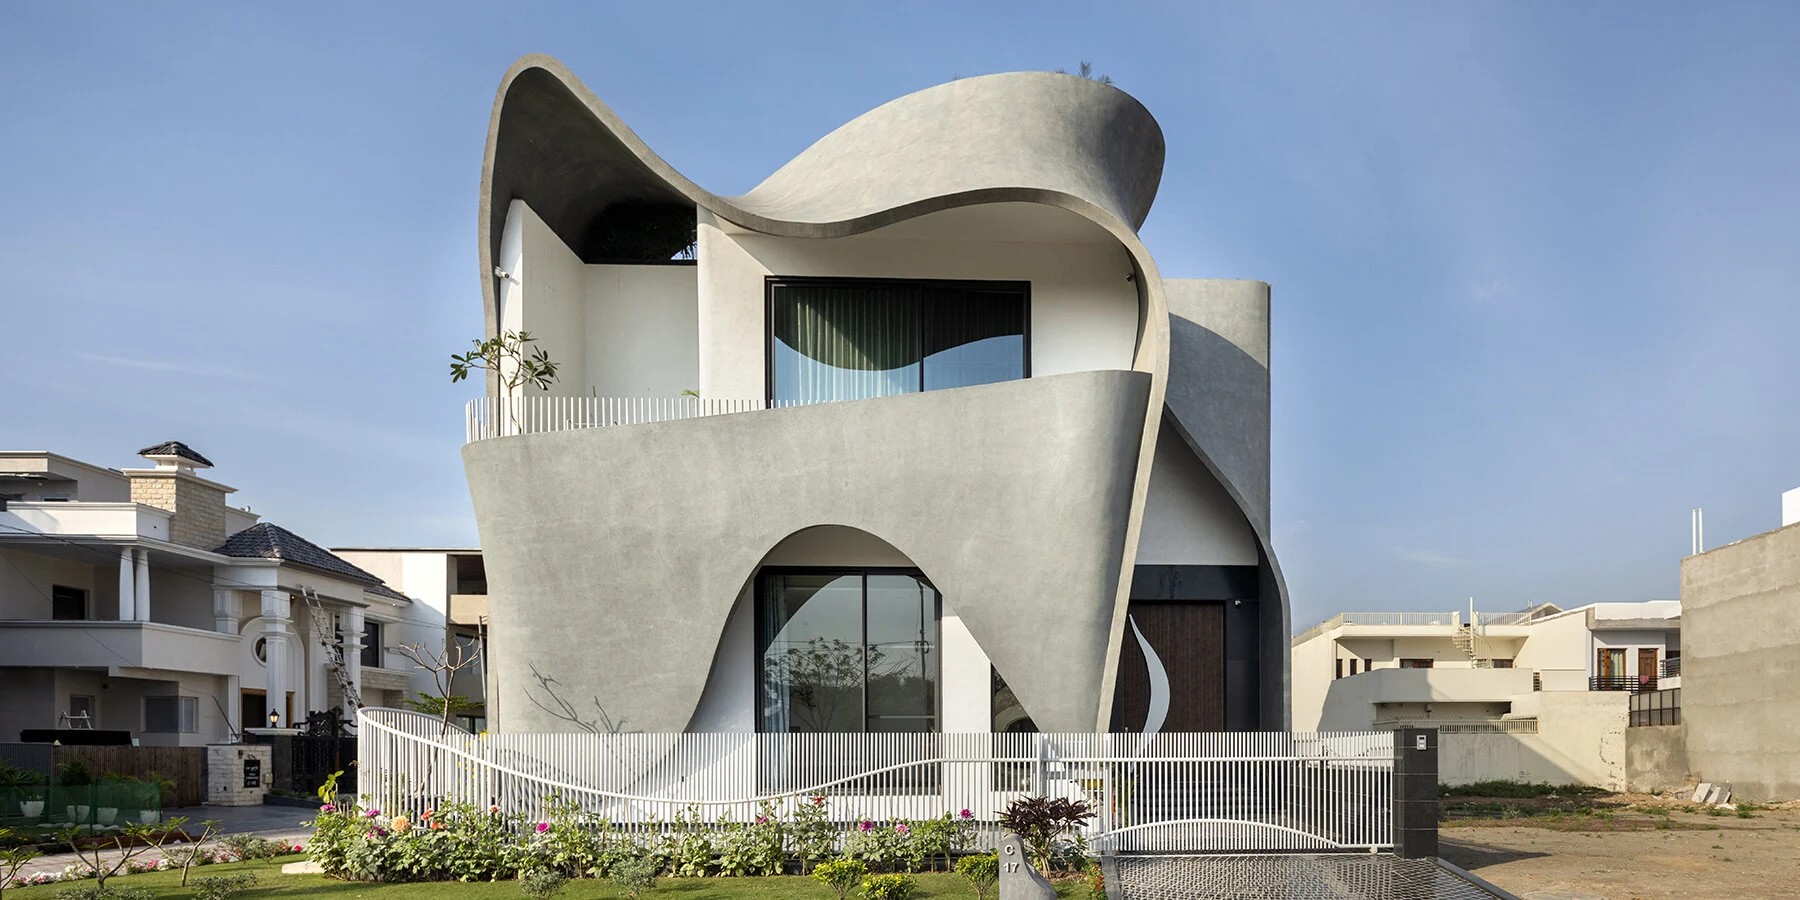 Ribbon House in Mohali, Punjab, India. Architecture: Studio Ardete Architects